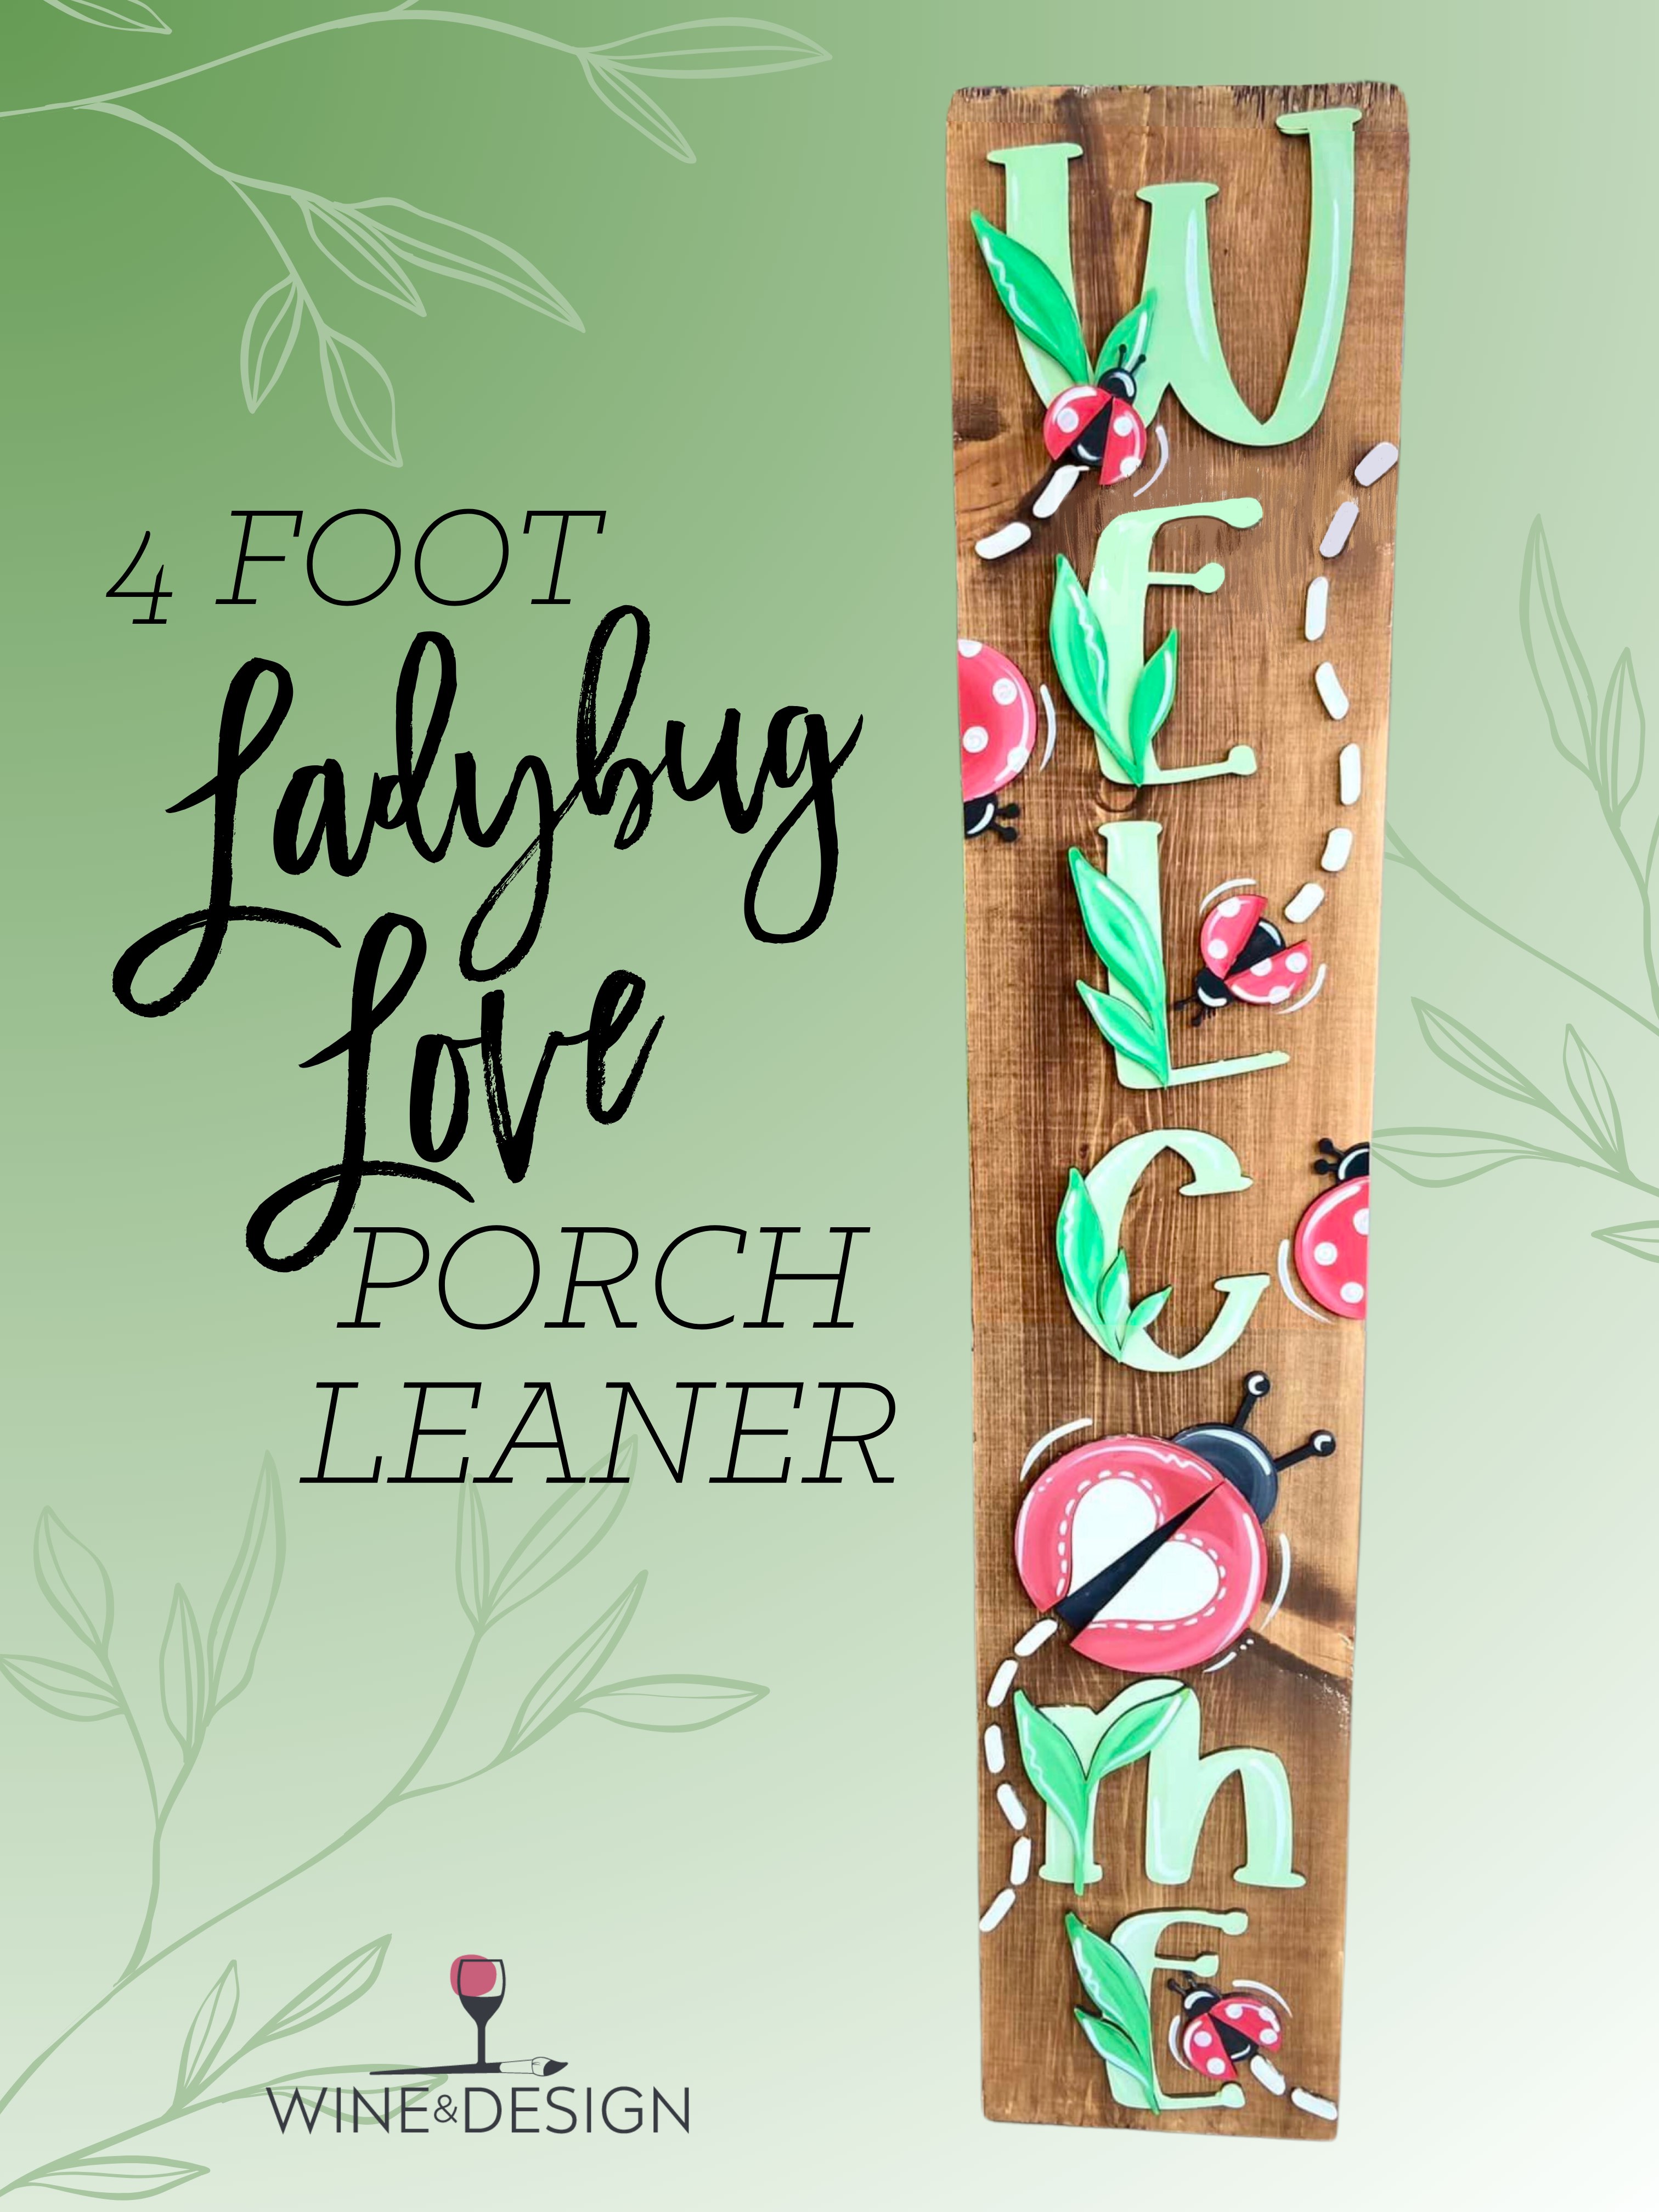 2 SEATS LEFT! Ladybug Love 4 Foot Porch Leaner